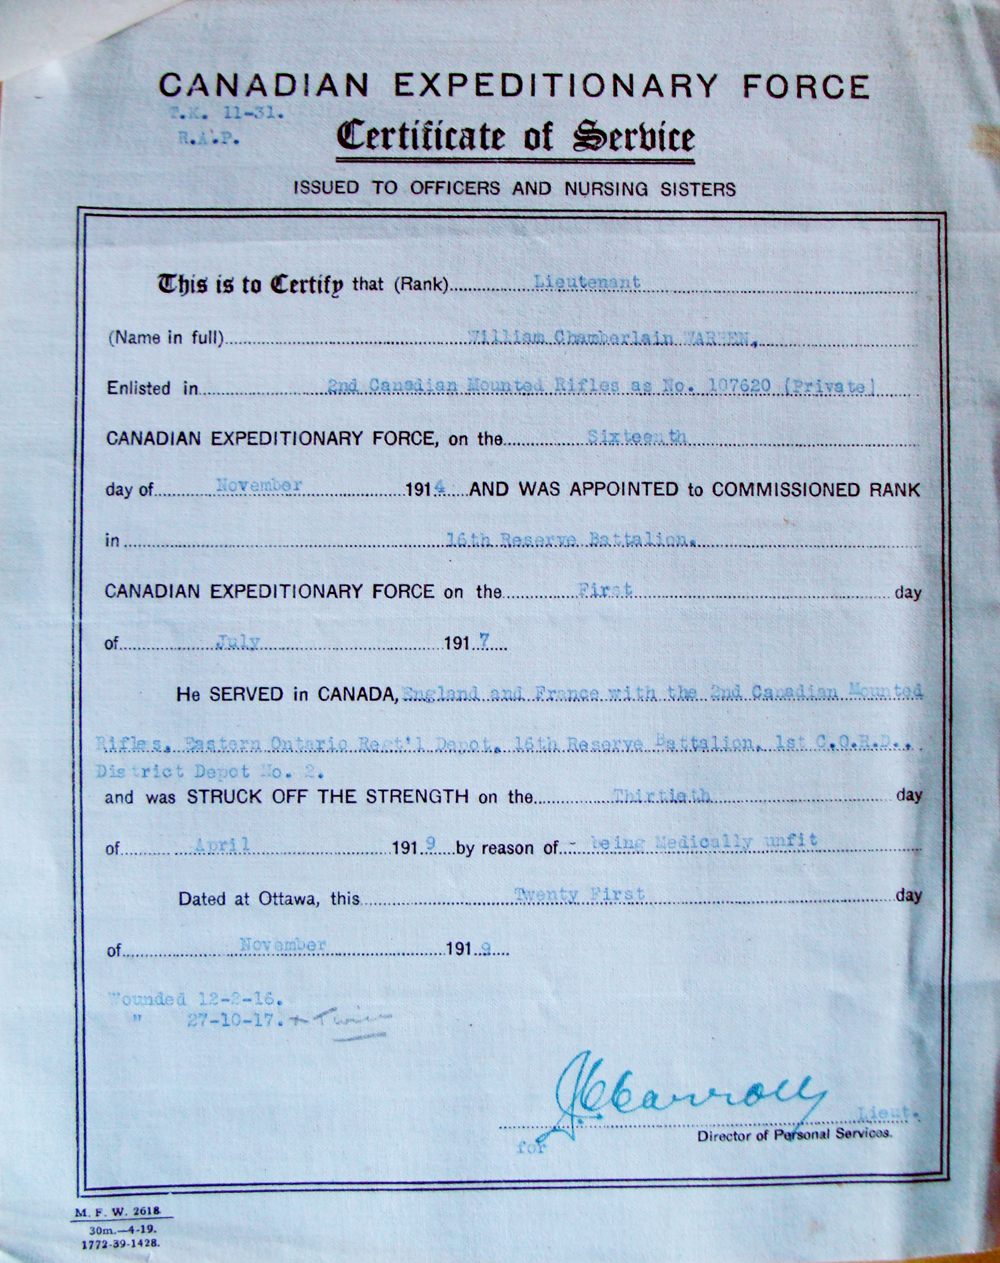 Lieutenant W.C. Warren’s Certificate of Service